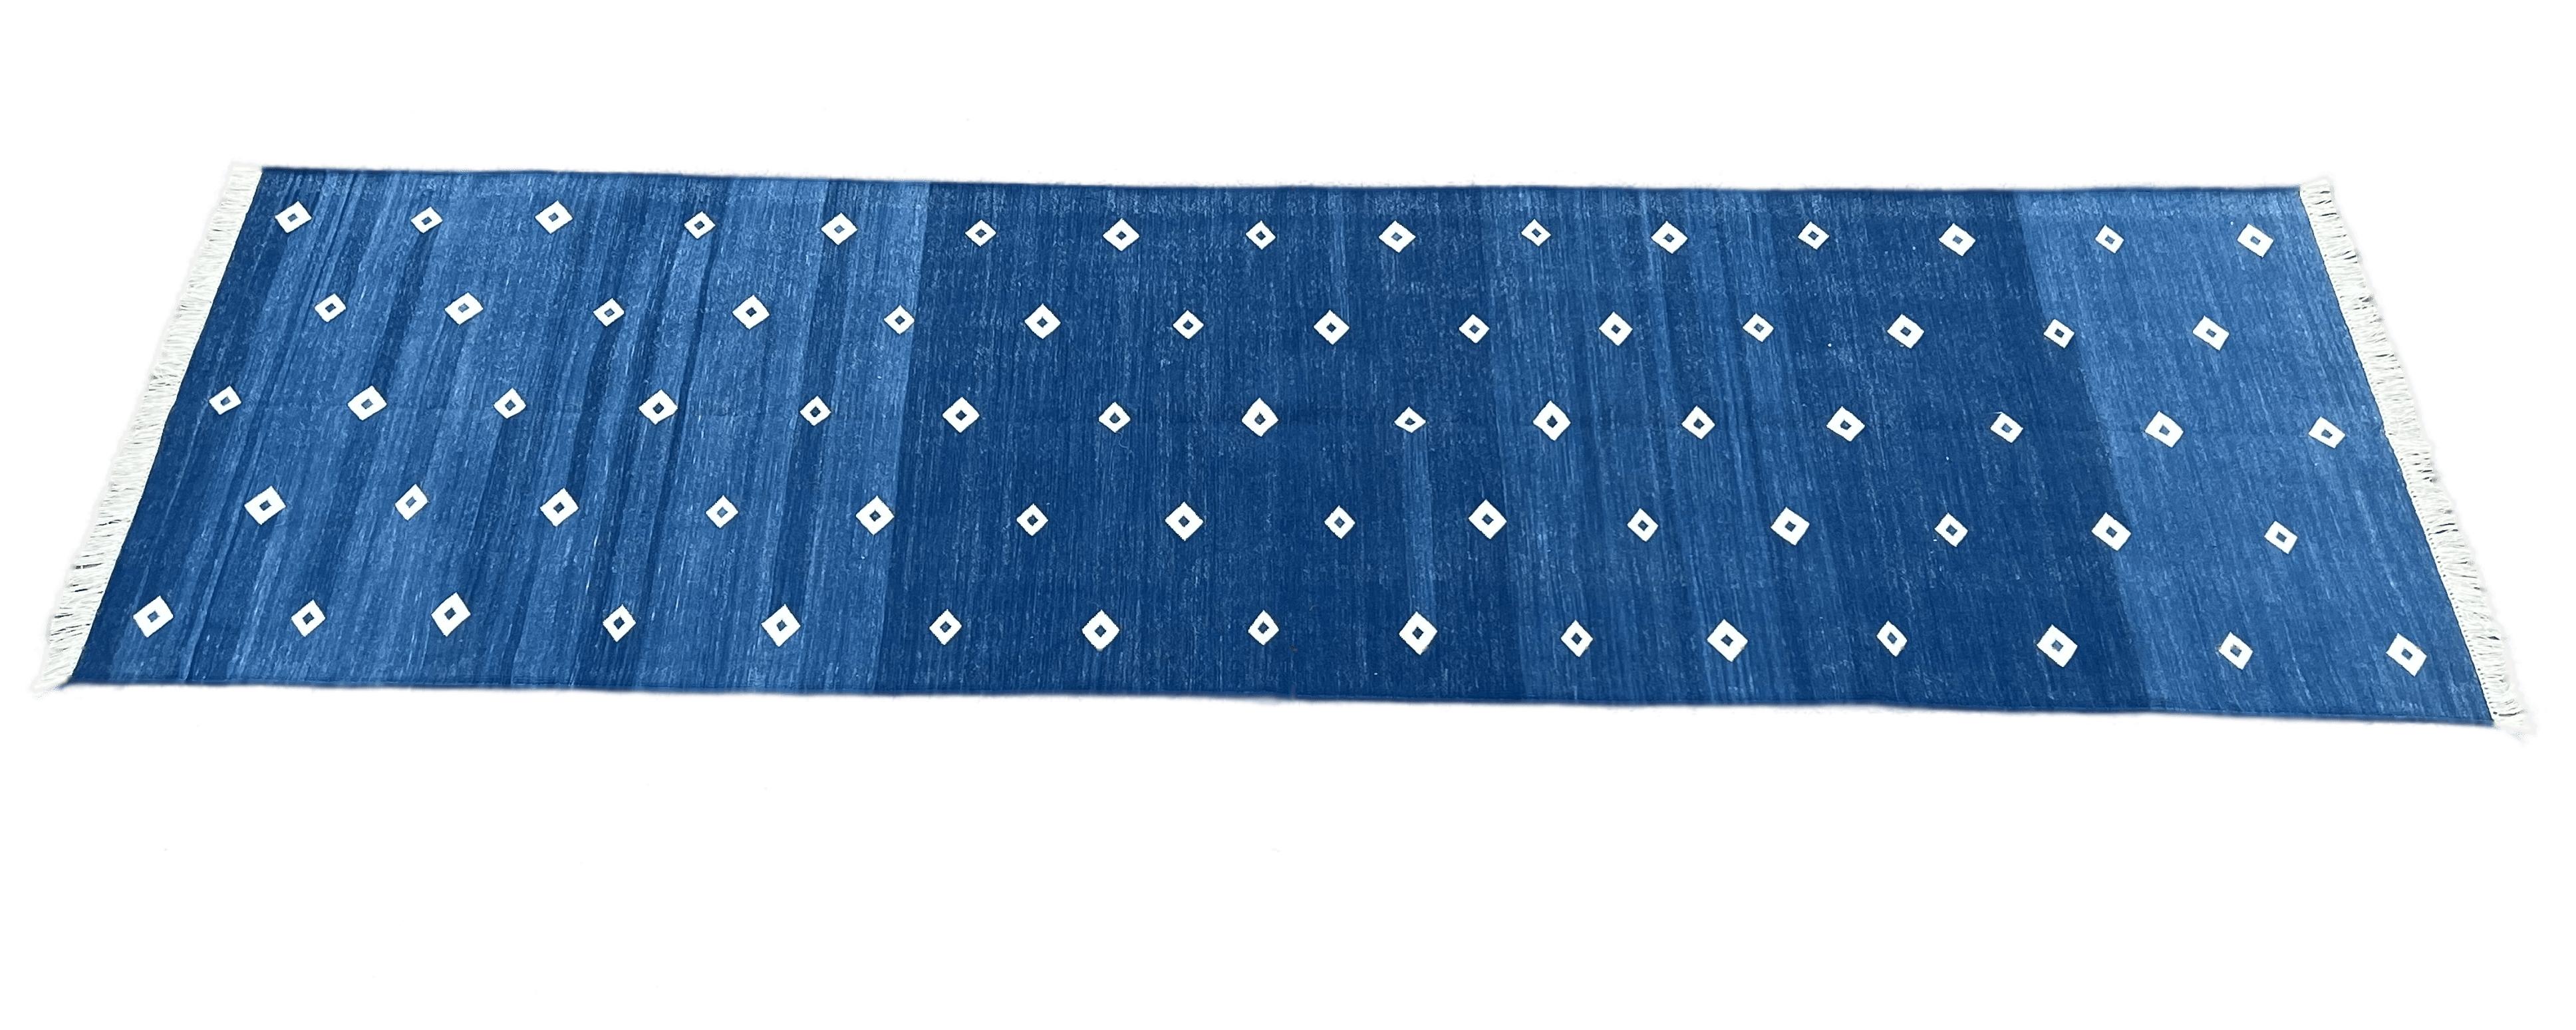 Handmade Cotton Area Flat Weave Runner, 3x10 Blue, White Diamond Indian Dhurrie For Sale 2